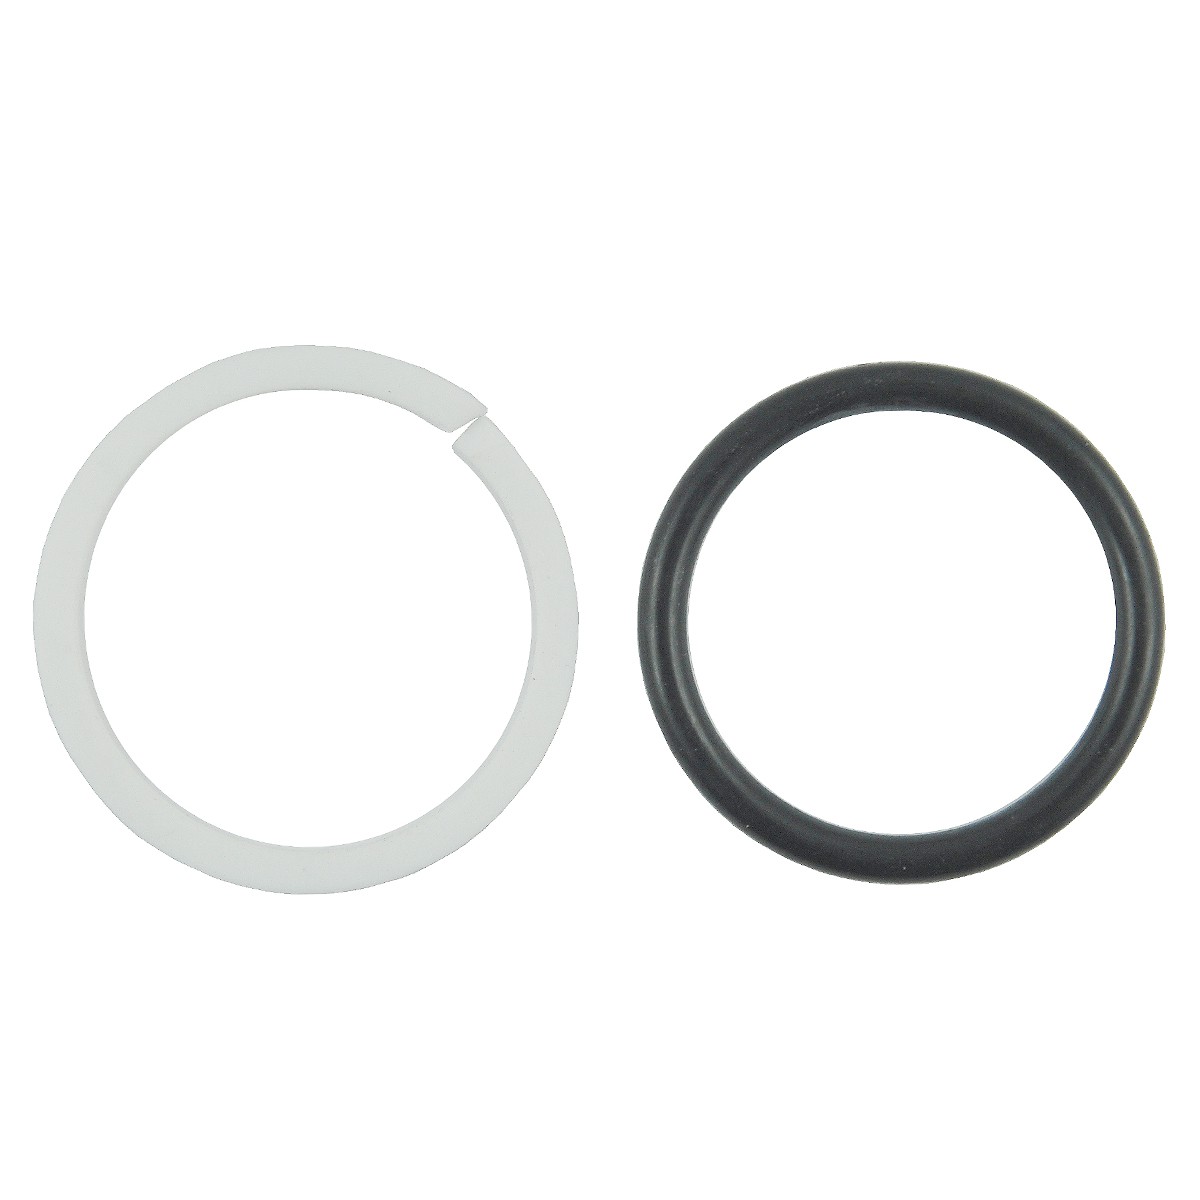 O-ring + Back up ring / 5.70 x 59.20 mm / Kubota L1500/L1501/L2000 / 04811-00550 / 32200-37381 / 5-18-107-01